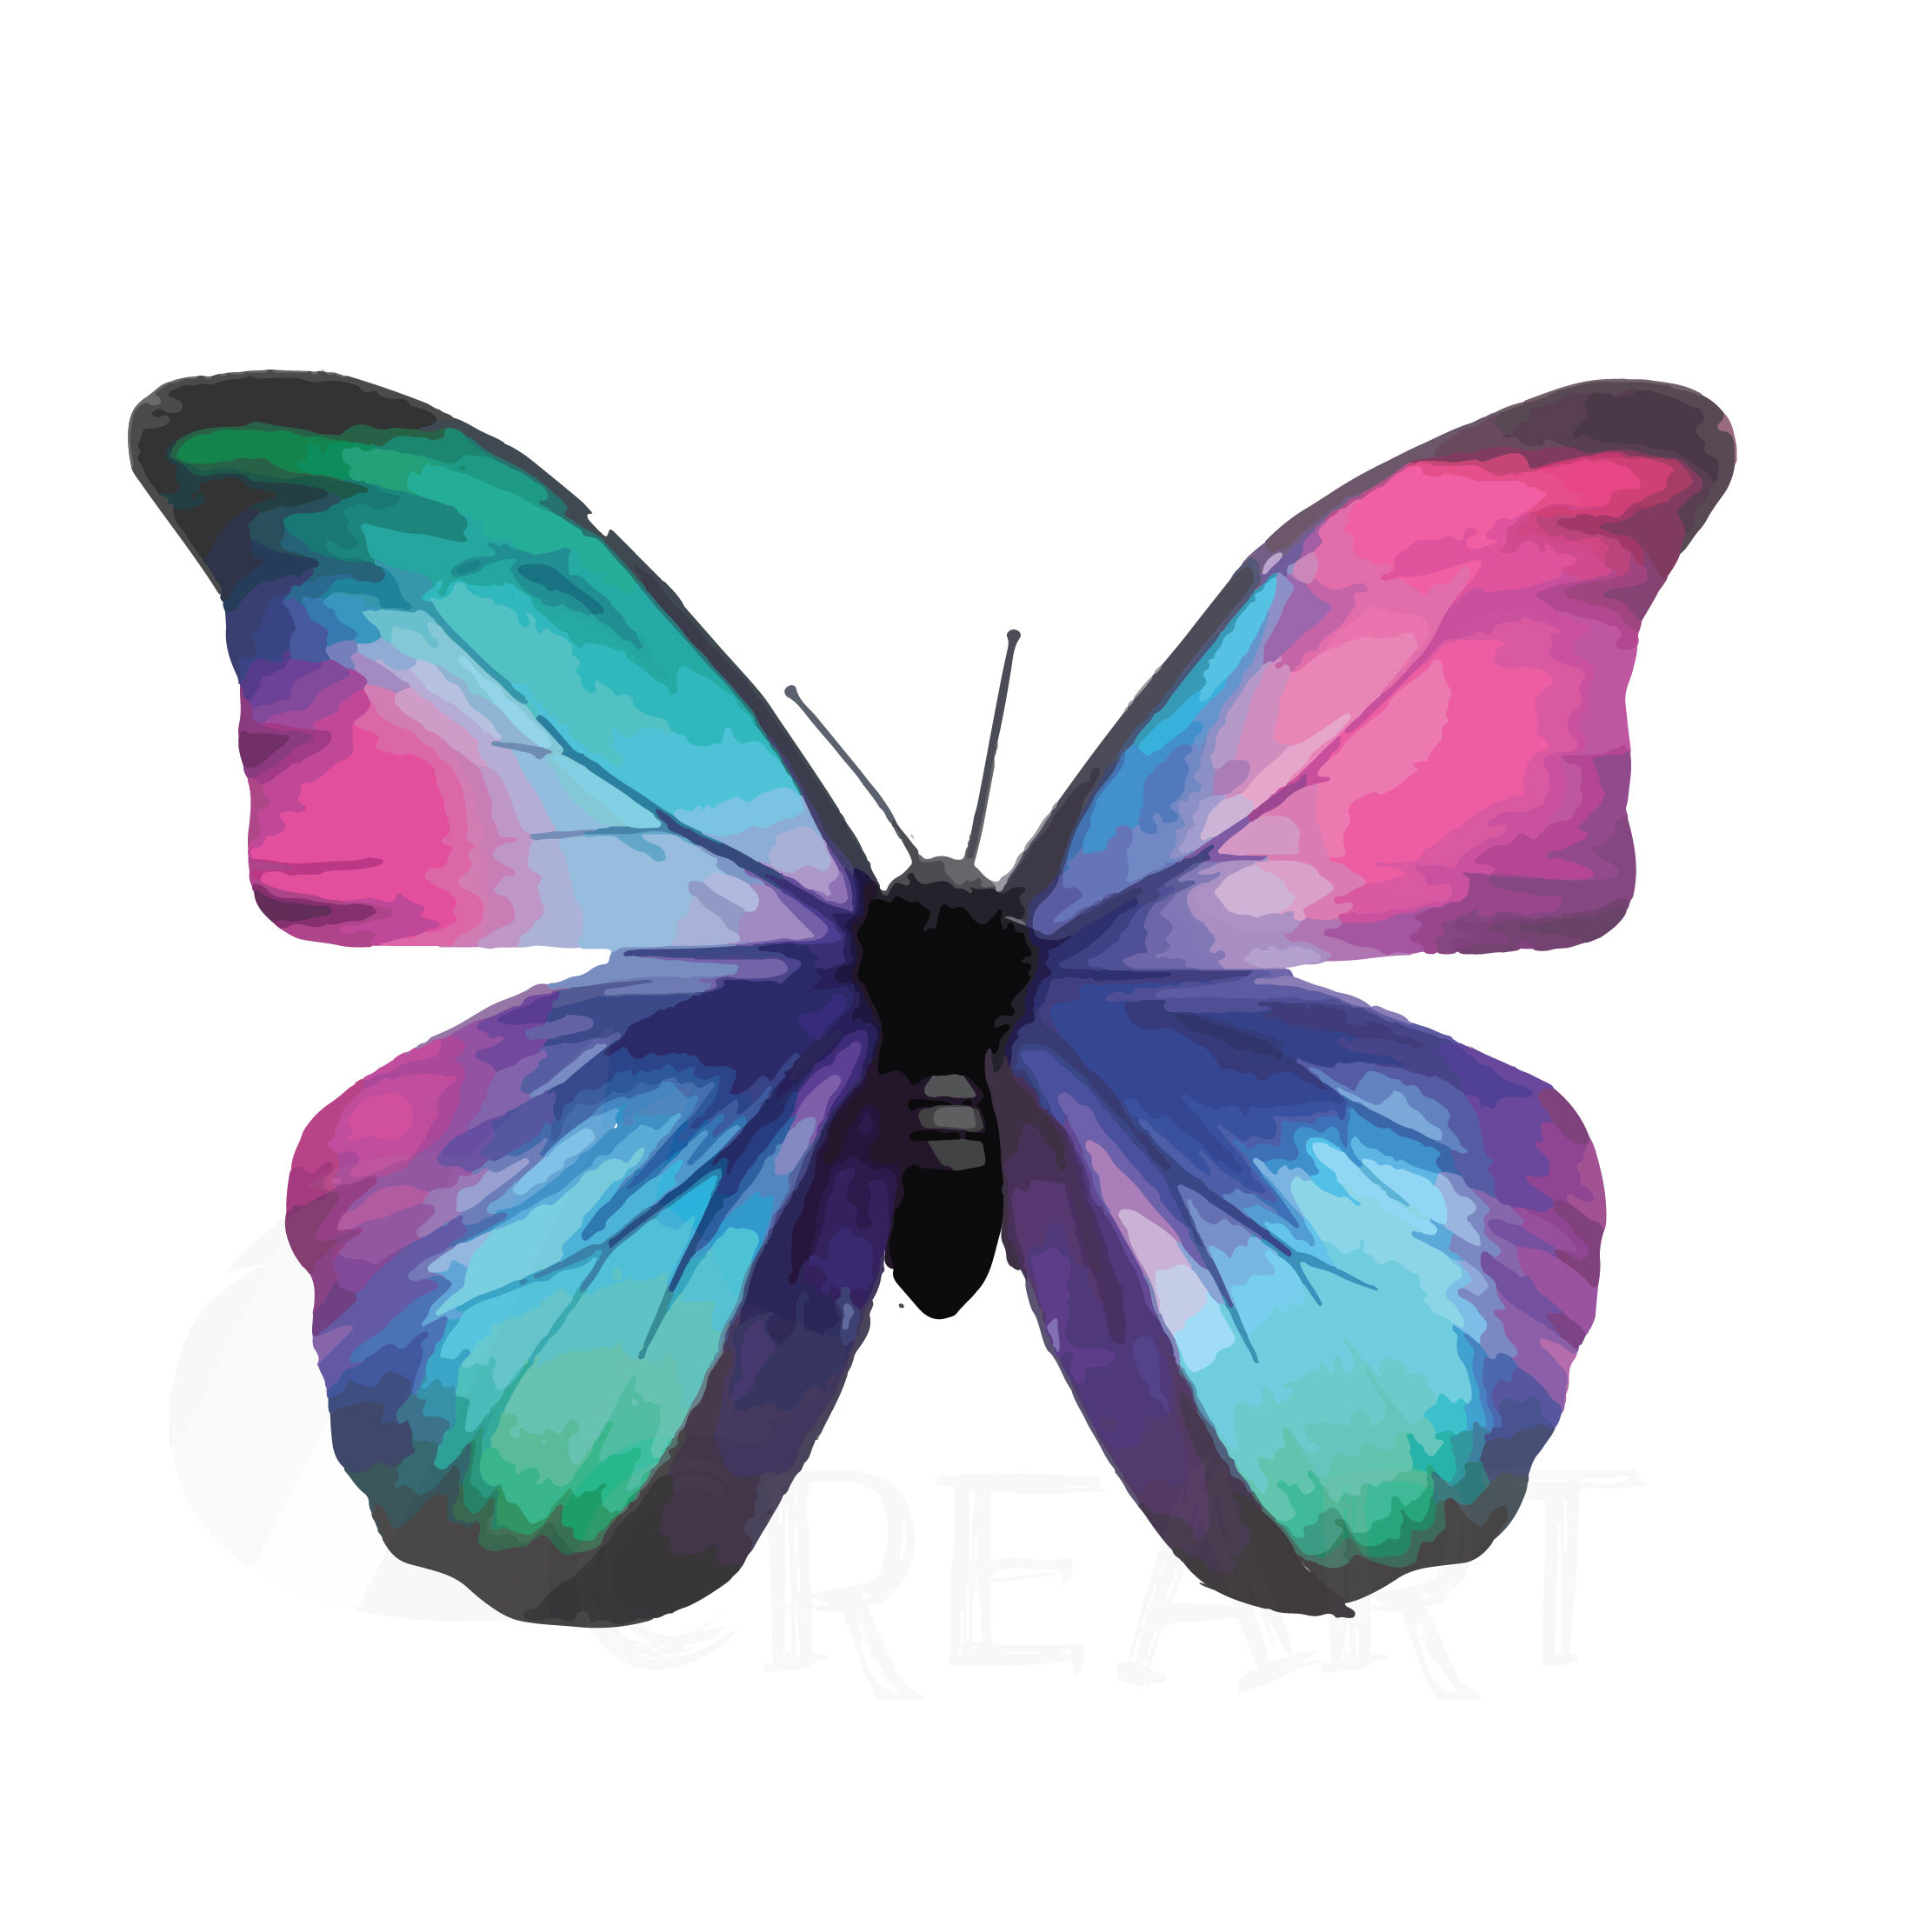 Download Watercolor Butterflies Clipart pack, vectors for ...